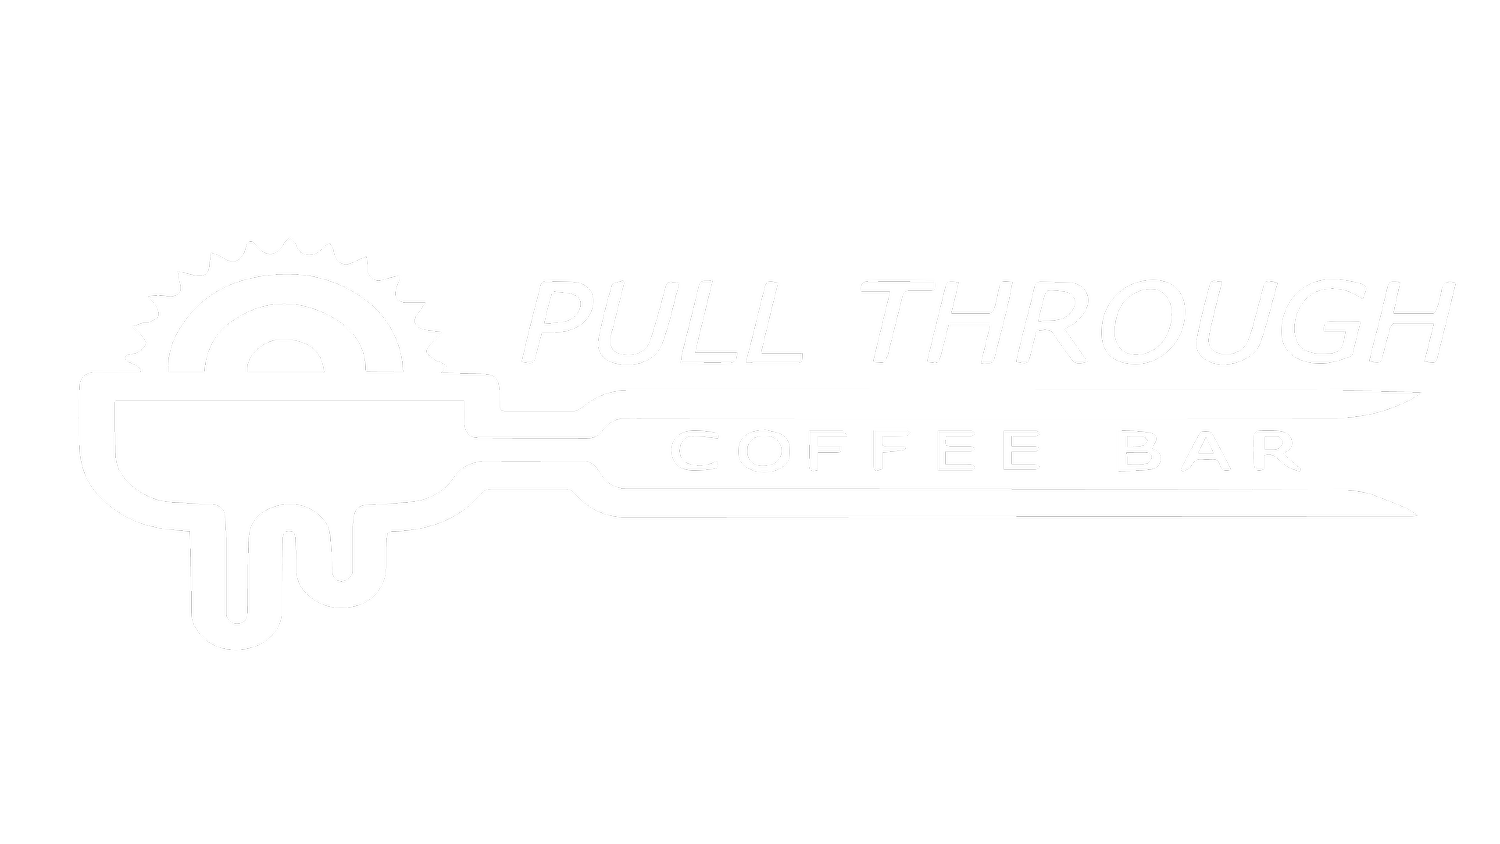 PULL THROUGH COFFEE BAR